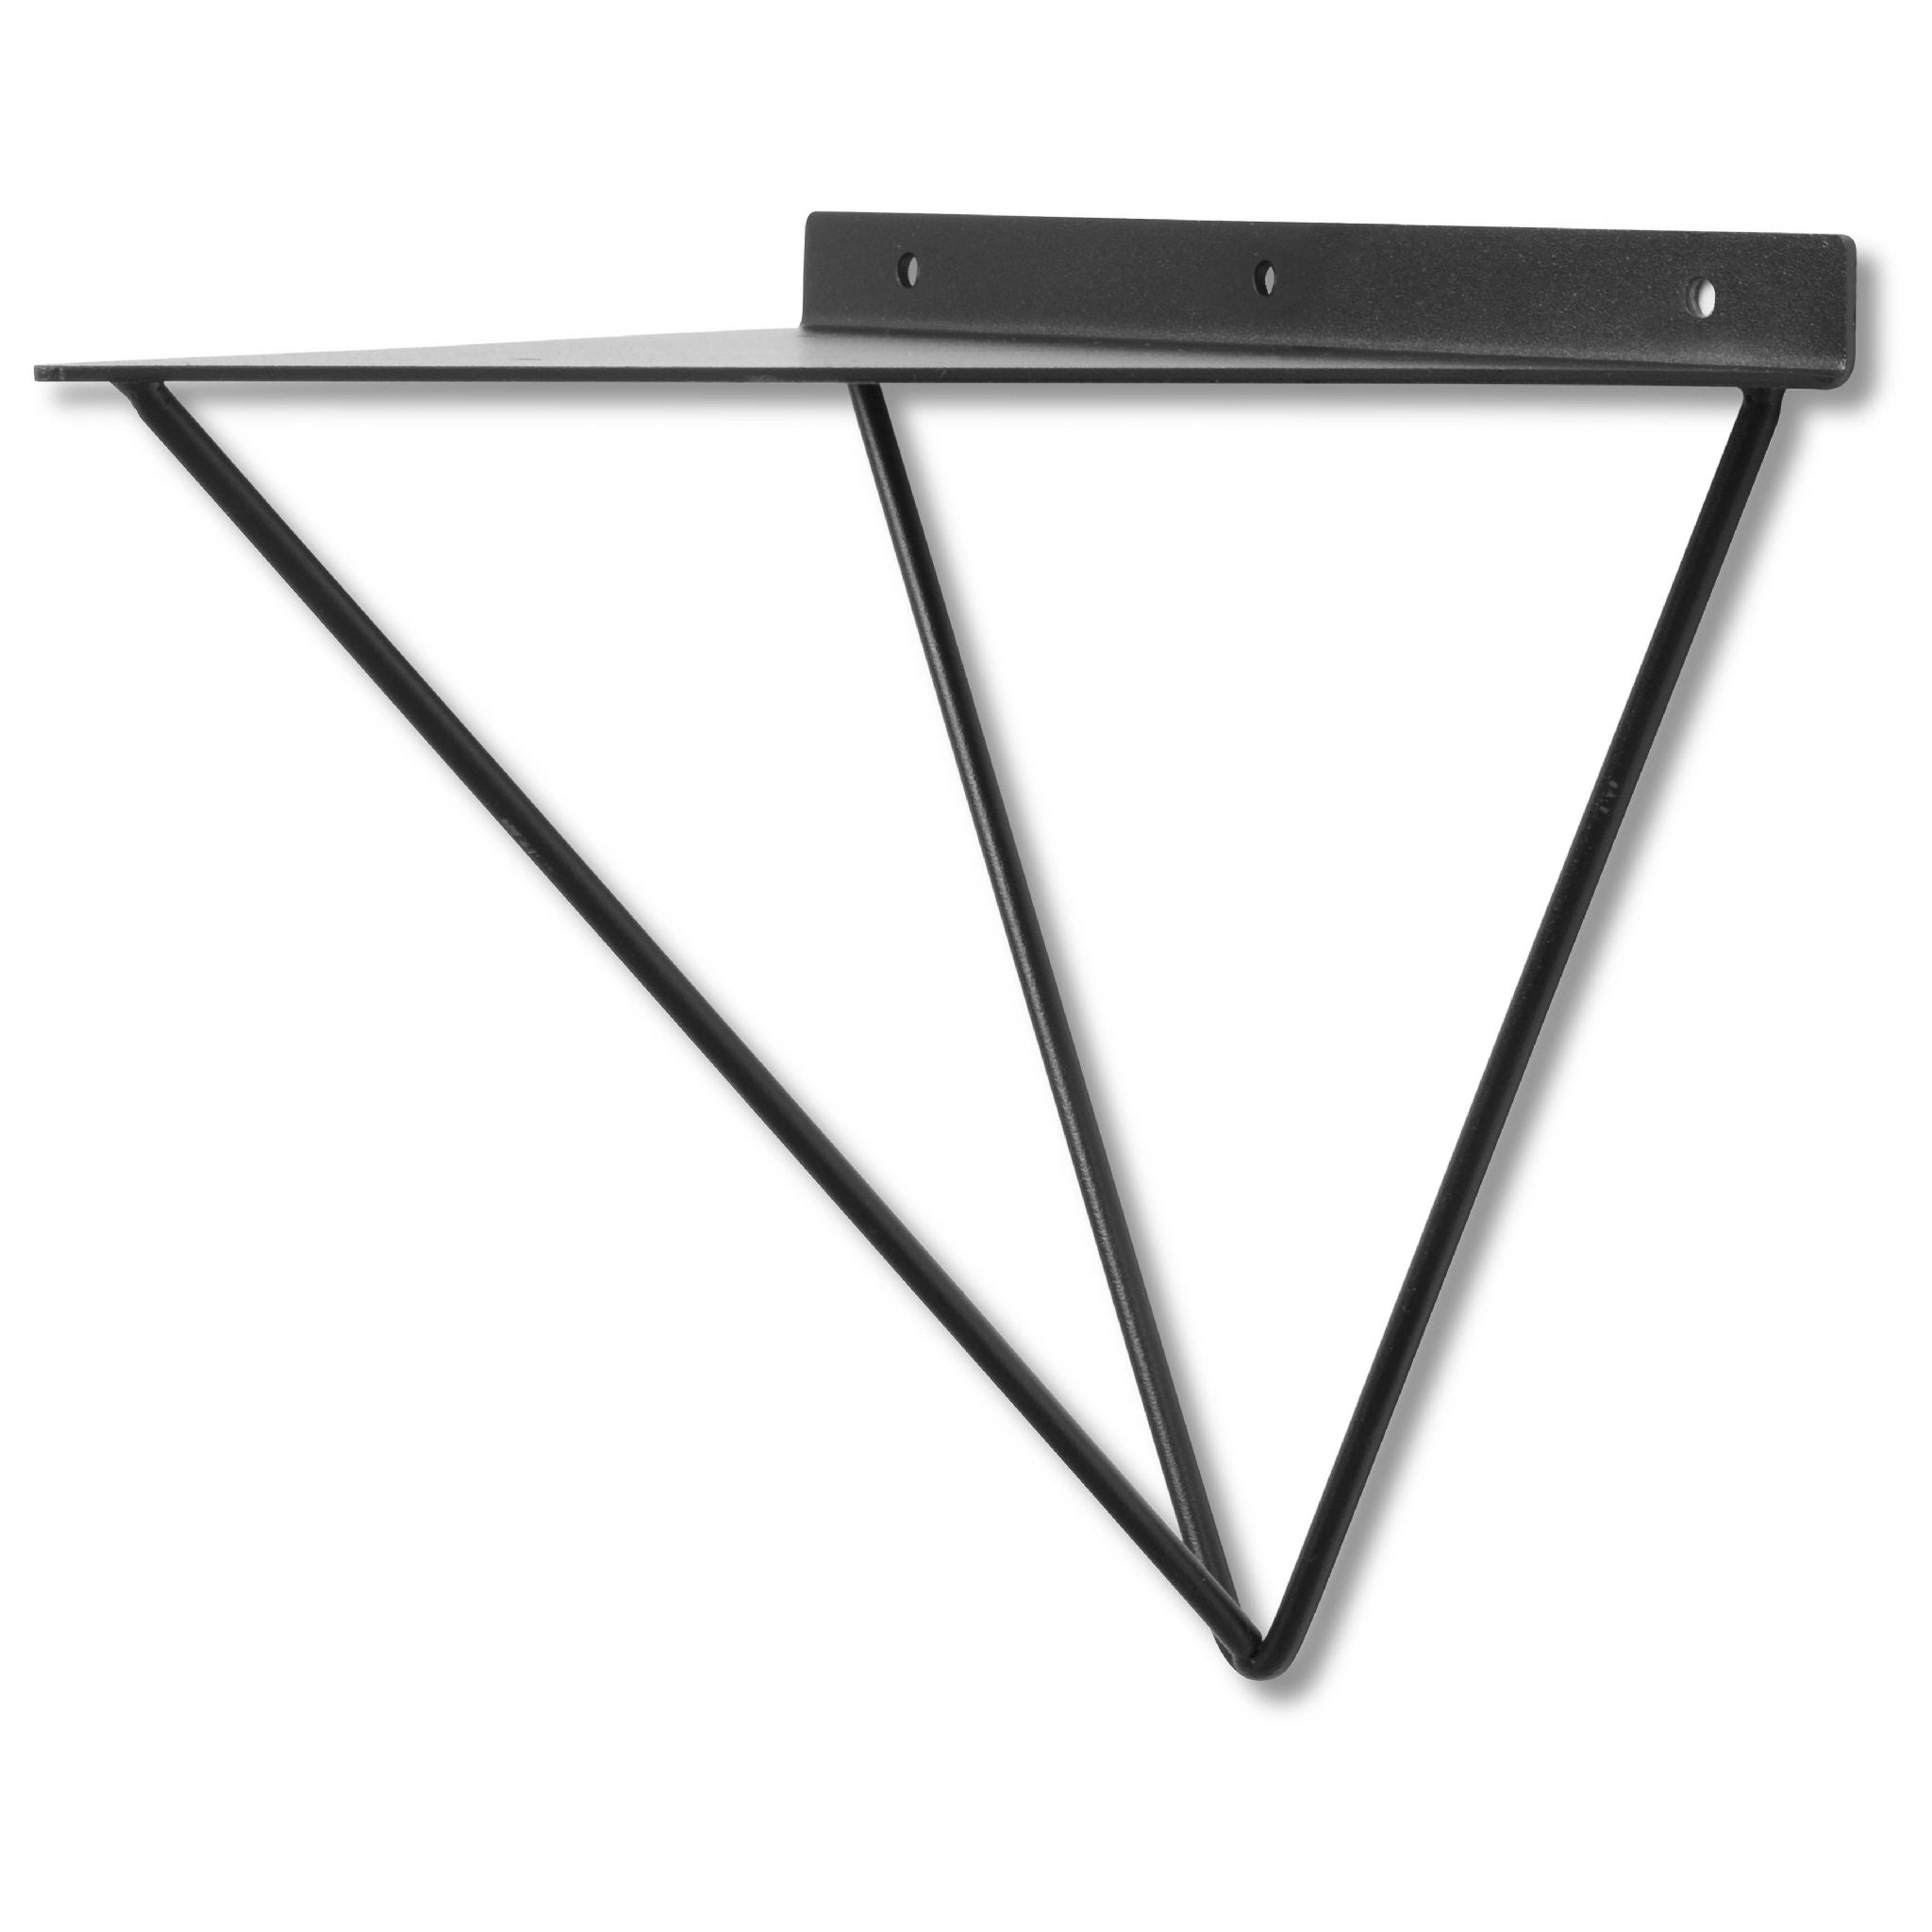 Bowes Solid Wood Shelf & Black Metal Brackets - 9x1.5 Smooth Shelf (22cmx3.5cm)